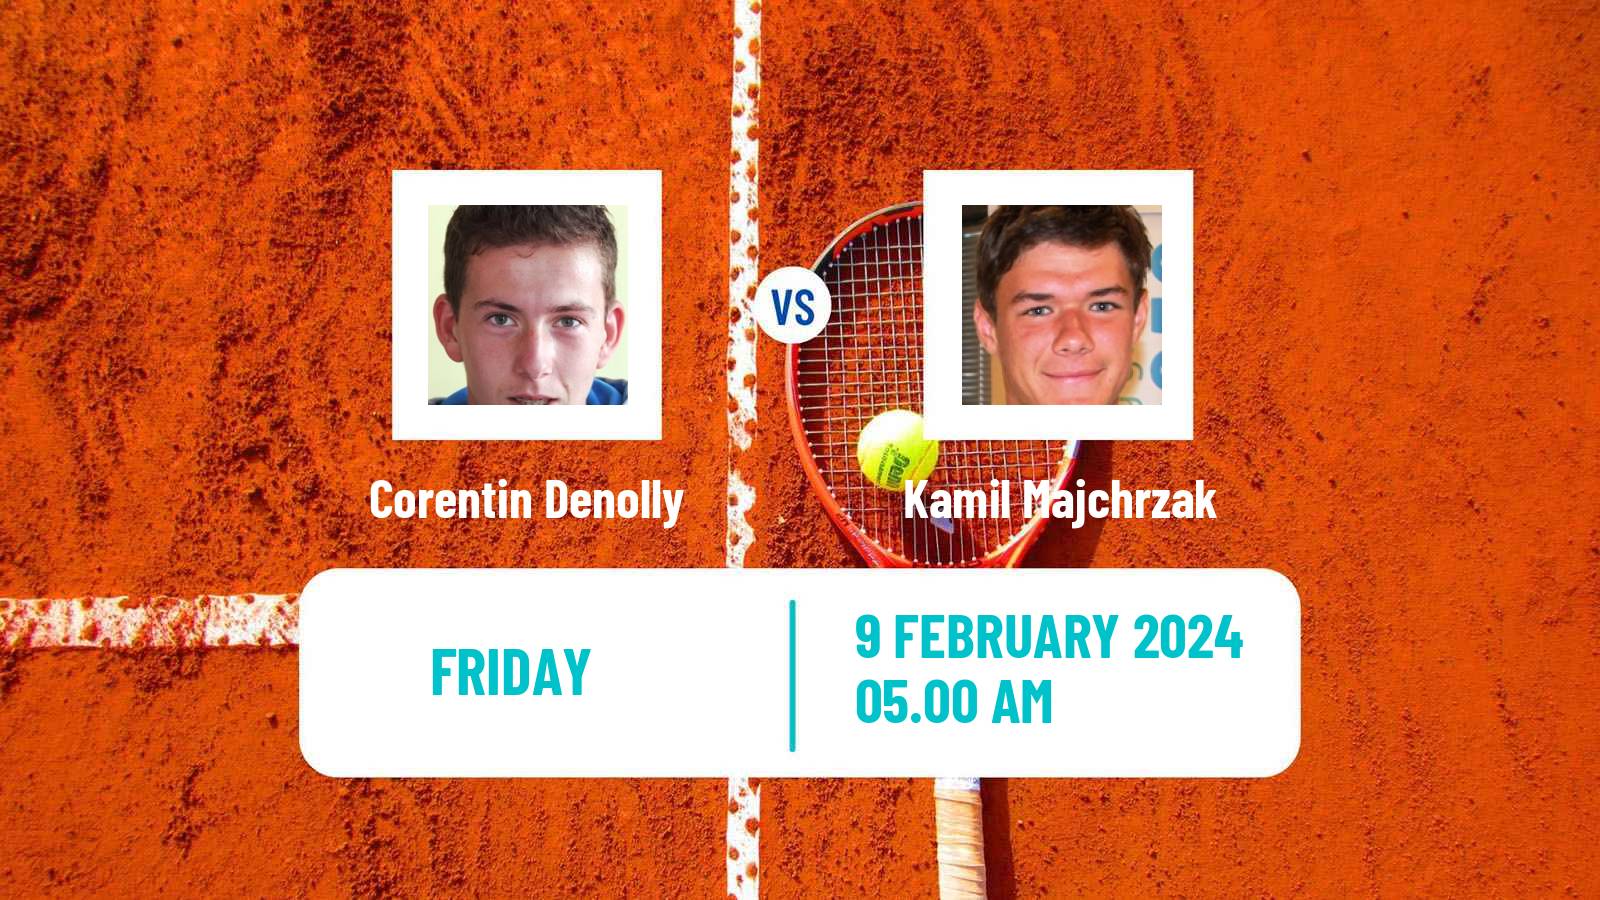 Tennis ITF M25 Hammamet 2 Men Corentin Denolly - Kamil Majchrzak